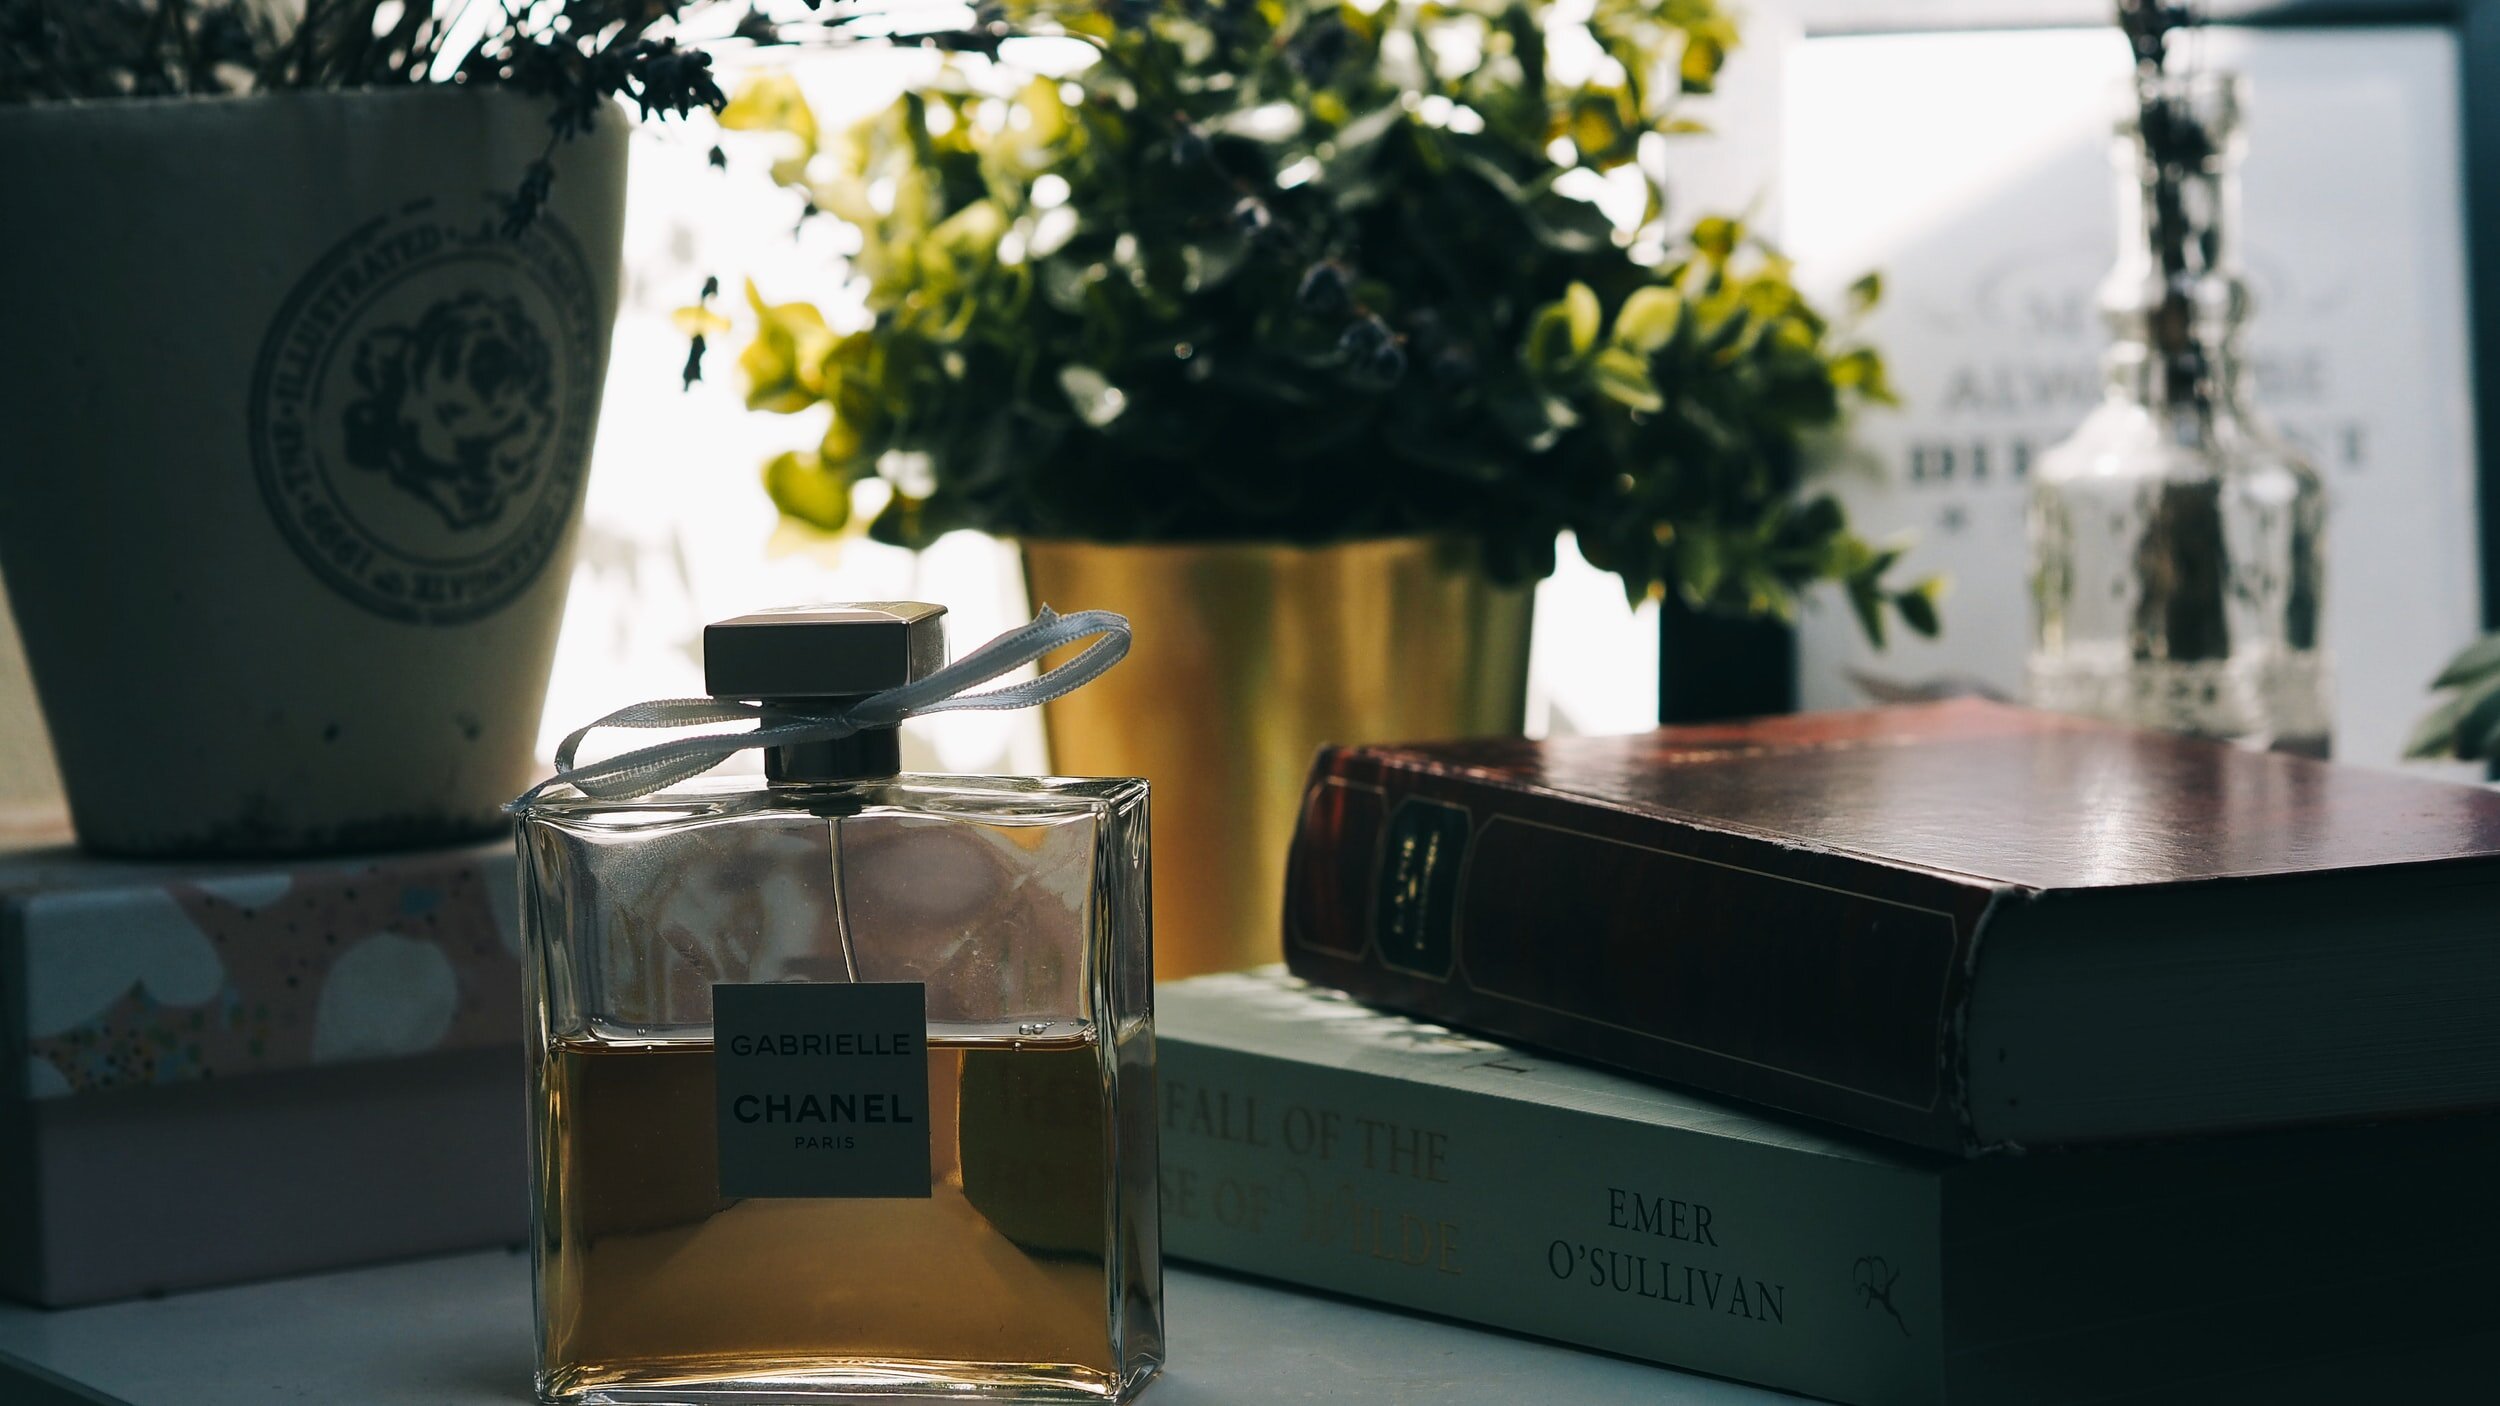 DIY Chanel Inspired Vase: Tumblr Inspired 